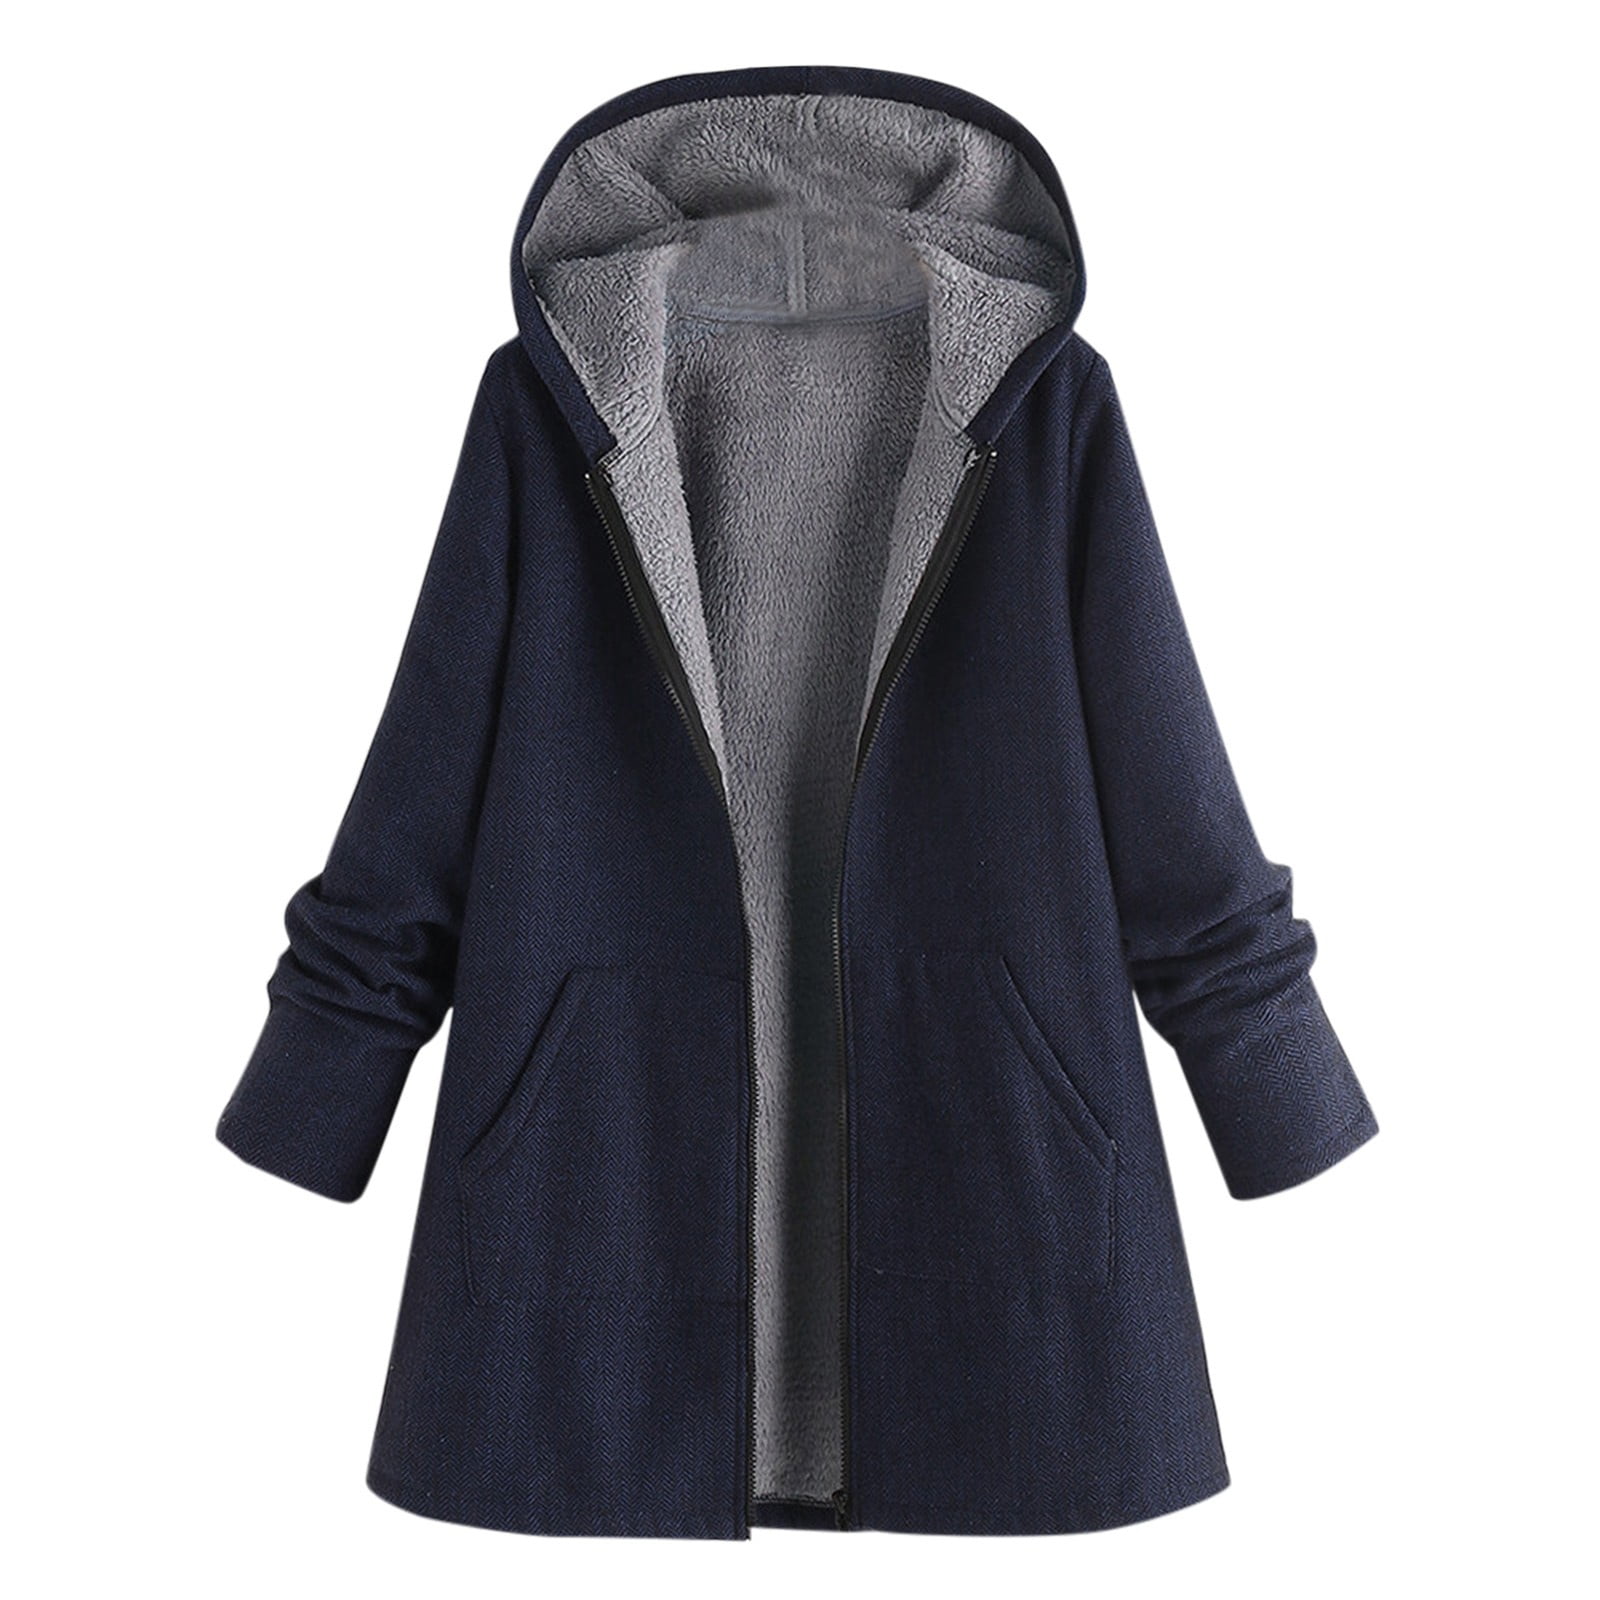 xiuh women's casual solid warm hoodie coat long sleeve zipper jacket ...